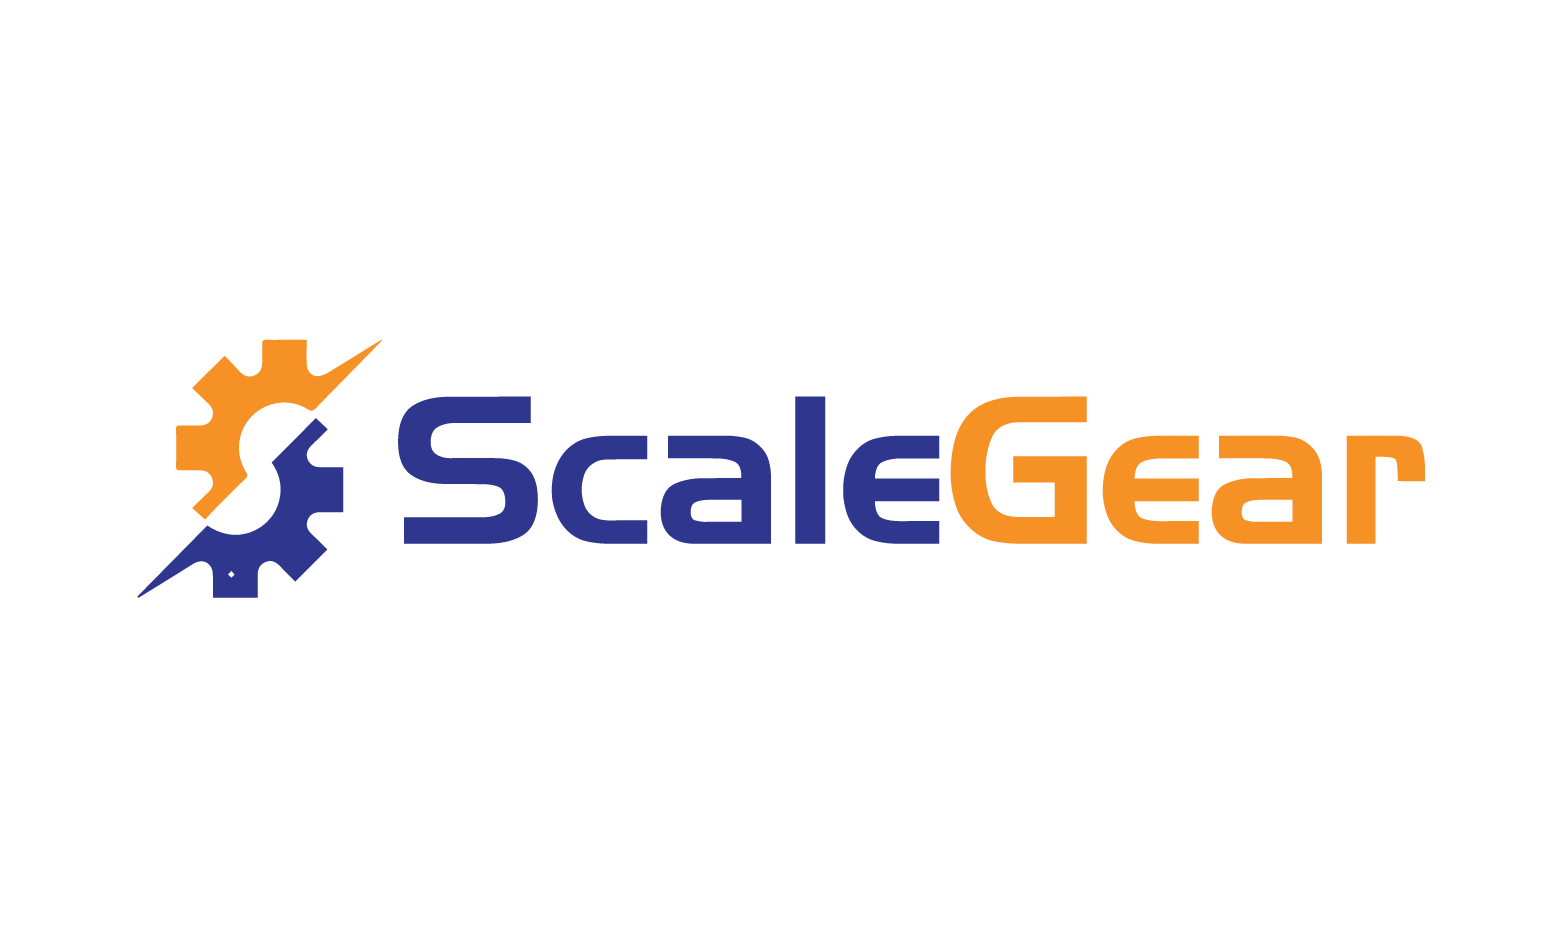 ScaleGear.com - Creative brandable domain for sale